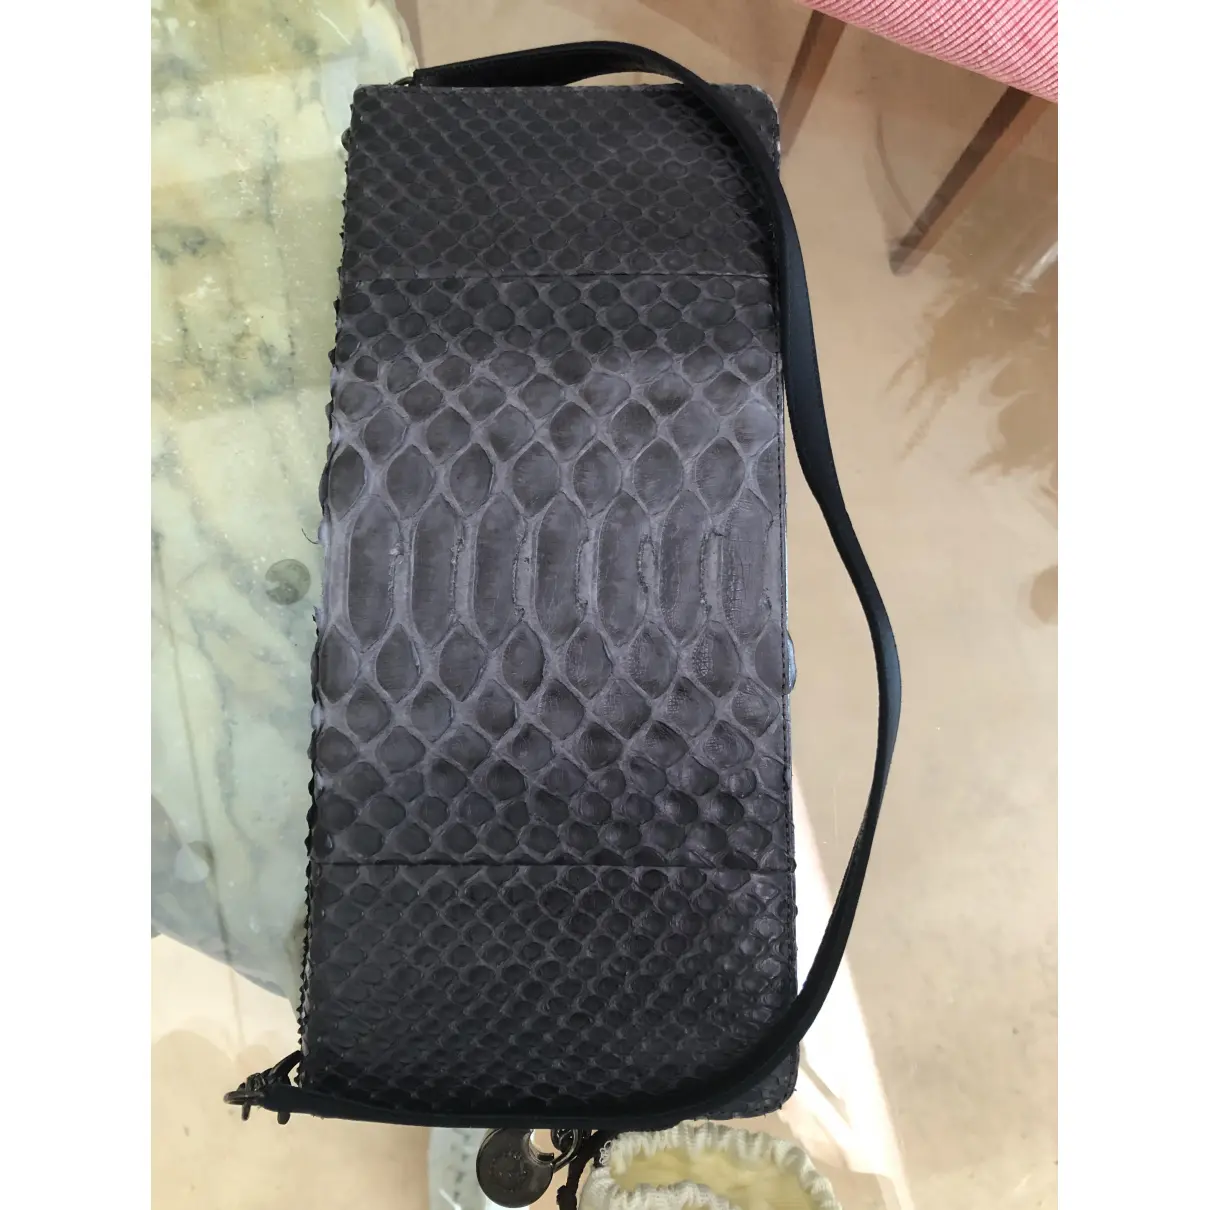 Buy Pollini Leather handbag online